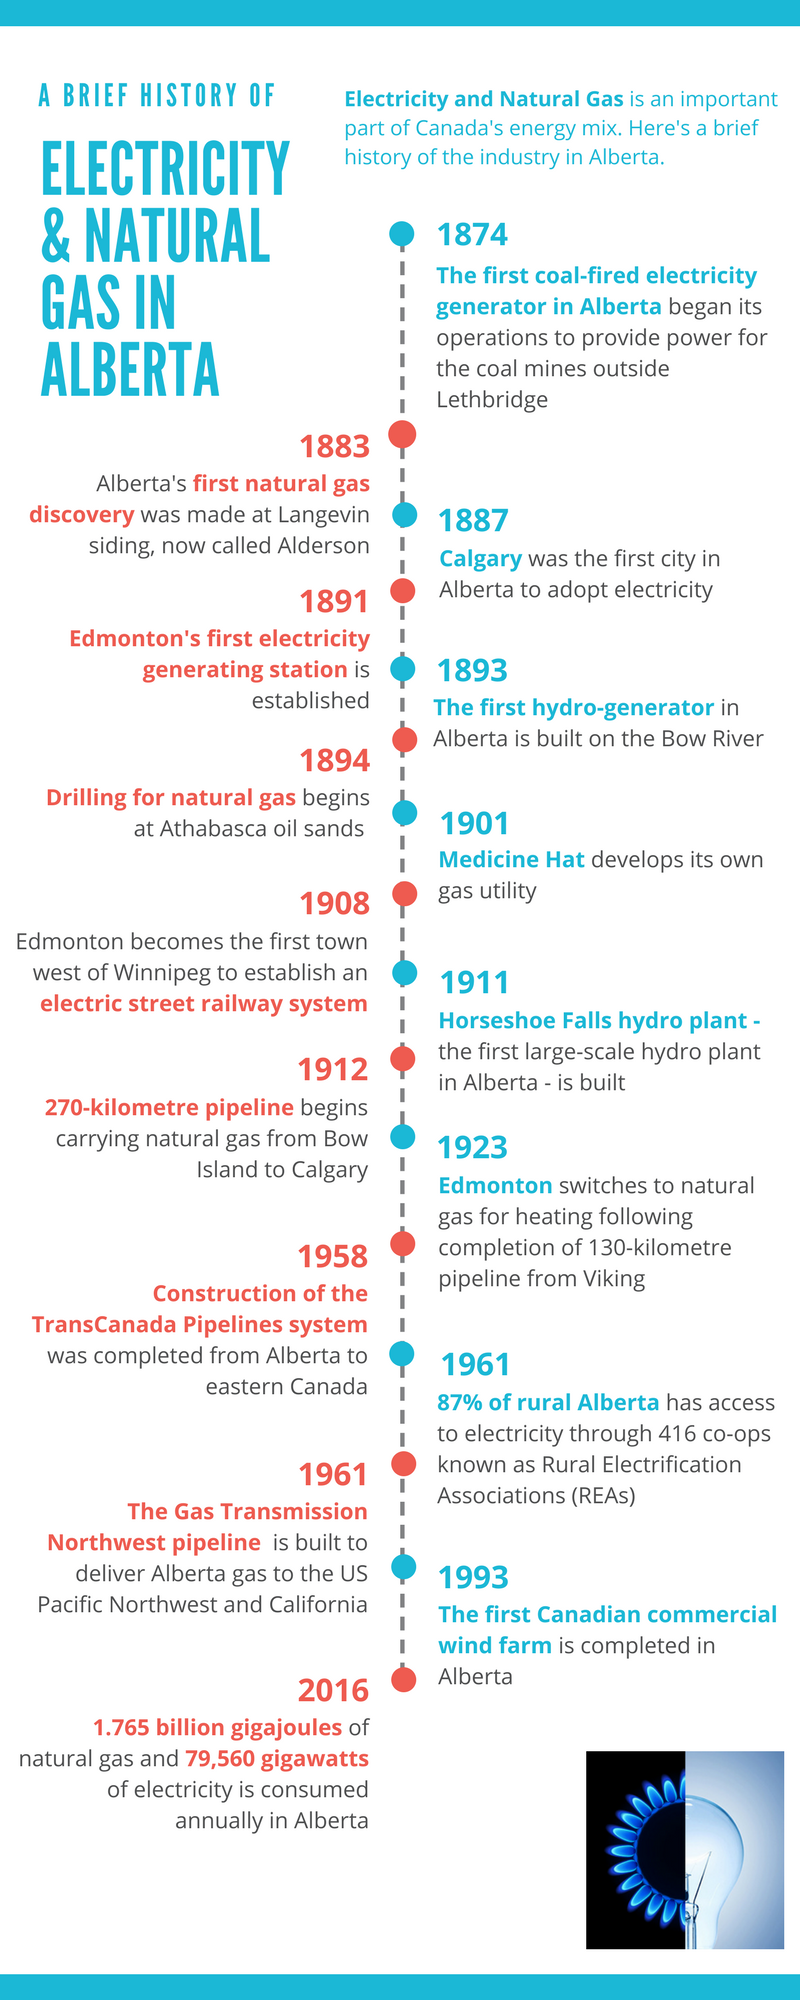 Source: Alberta's Energy Resources Heritage (www.history.alberta.ca) and 2016 Alberta Market Surveillance Administrator Report